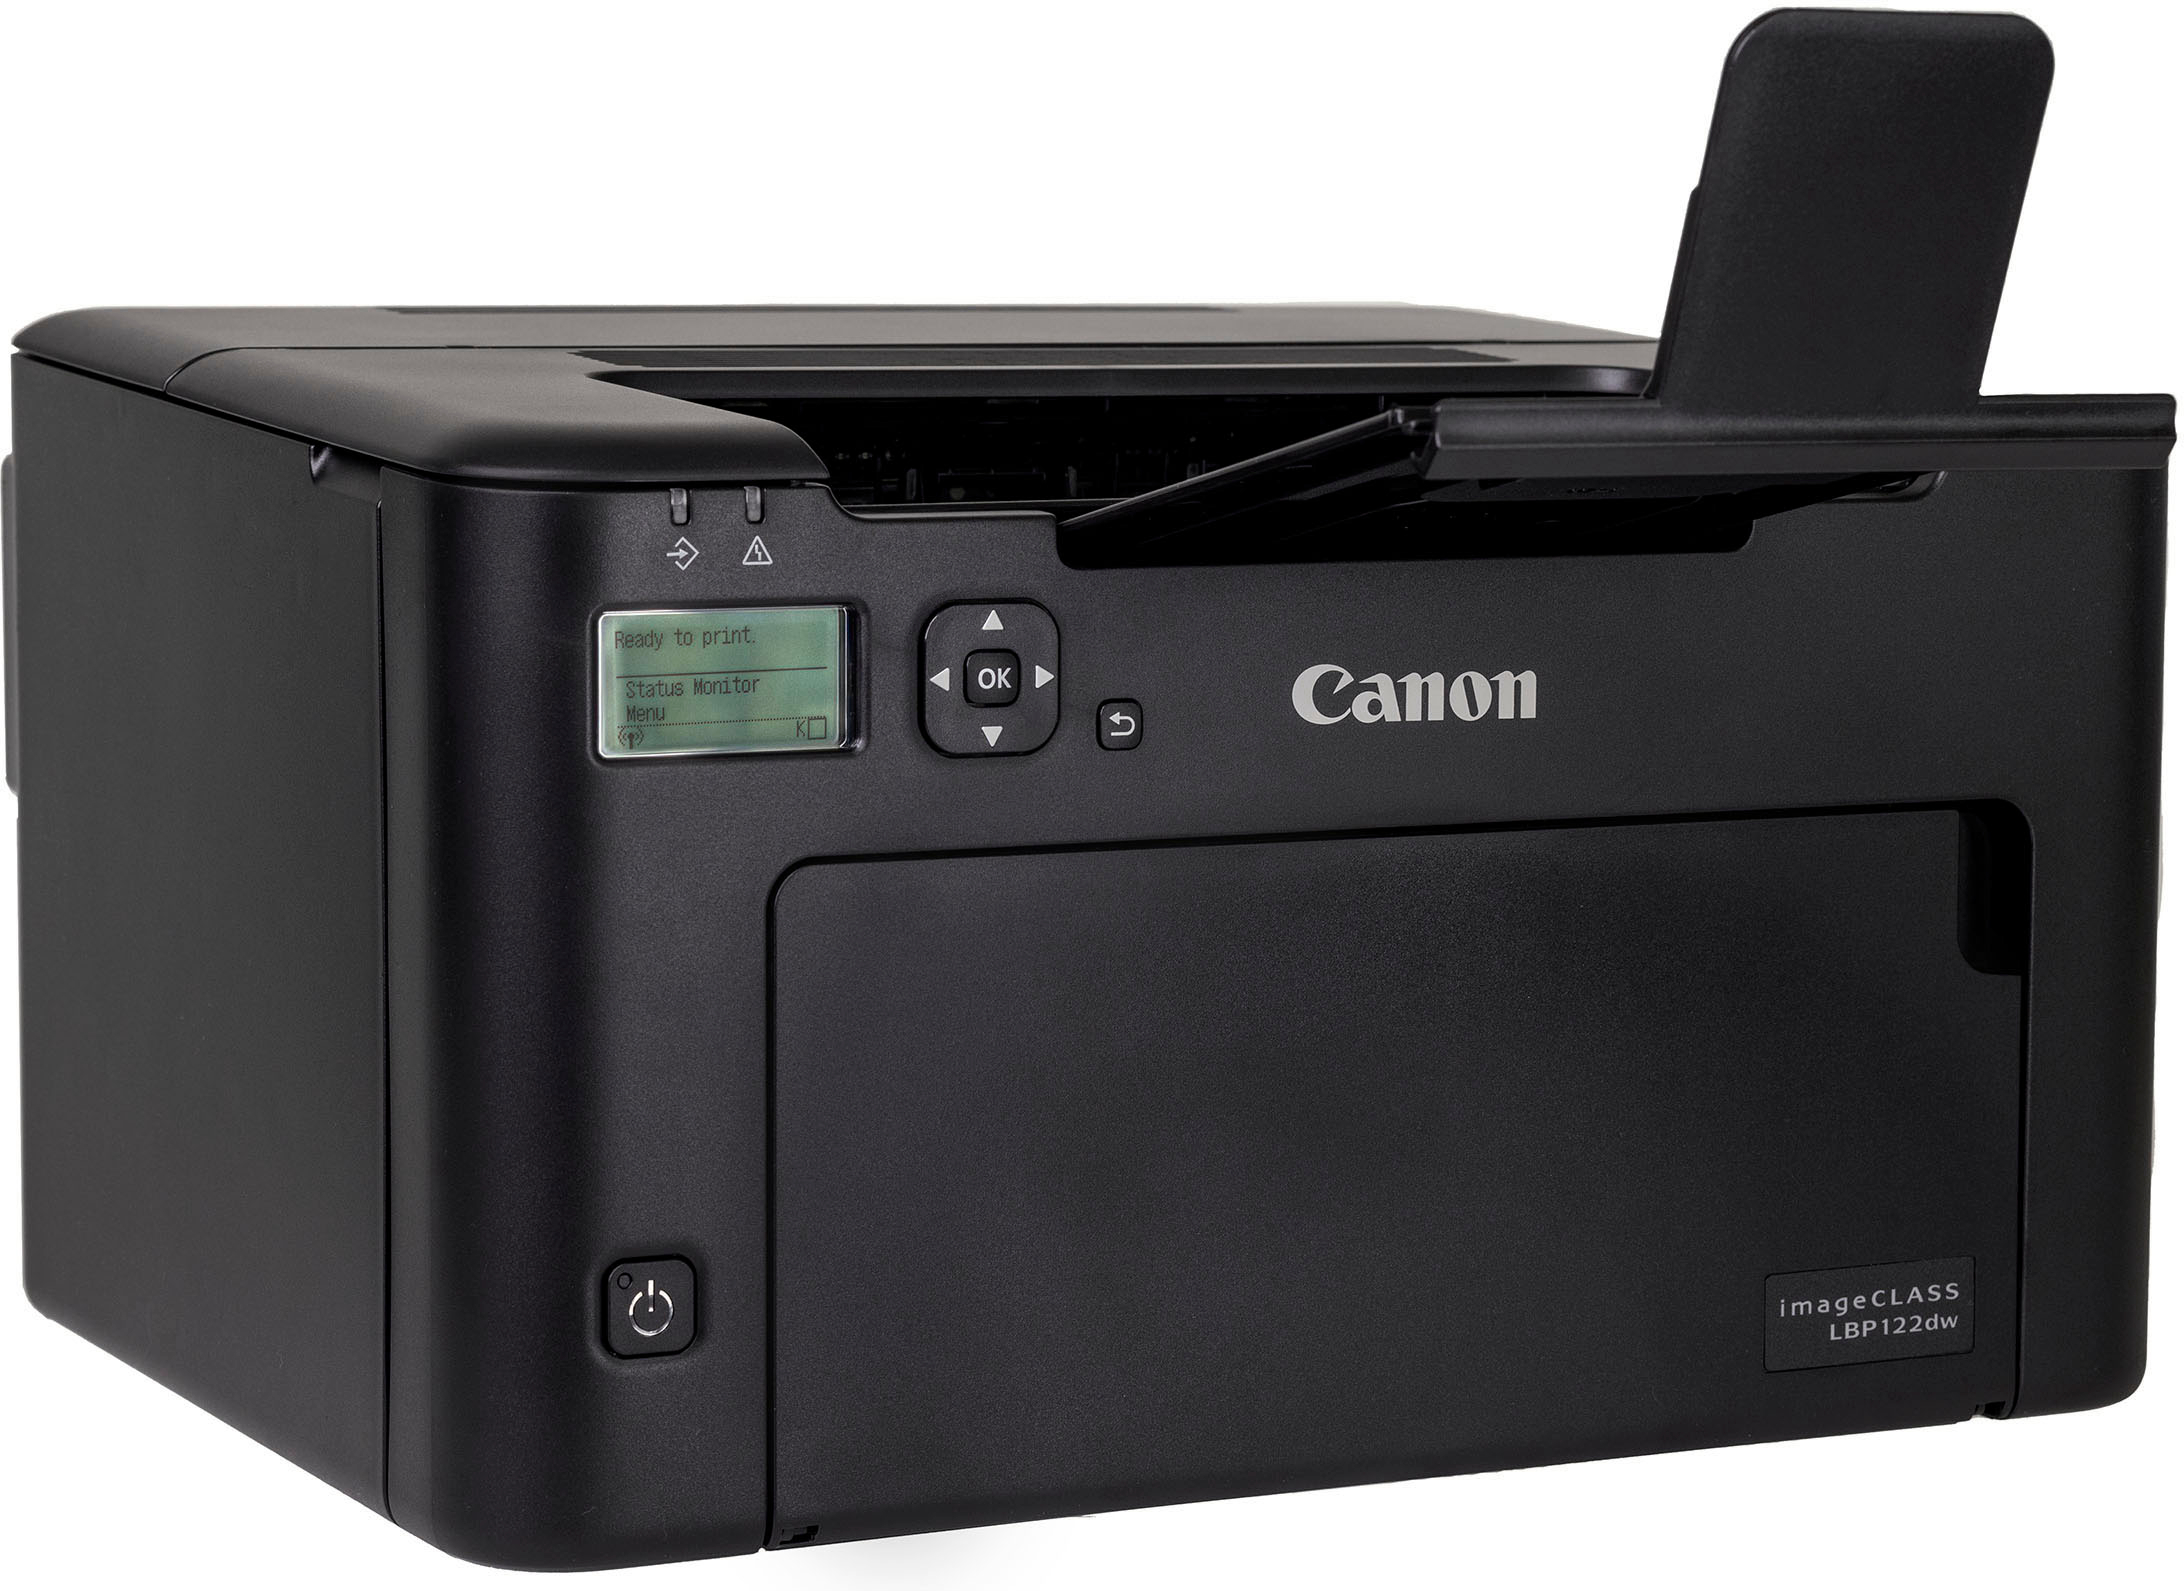 Angle View: Canon - imageCLASS LBP122dw Wireless Black-and-White Laser Printer - Black